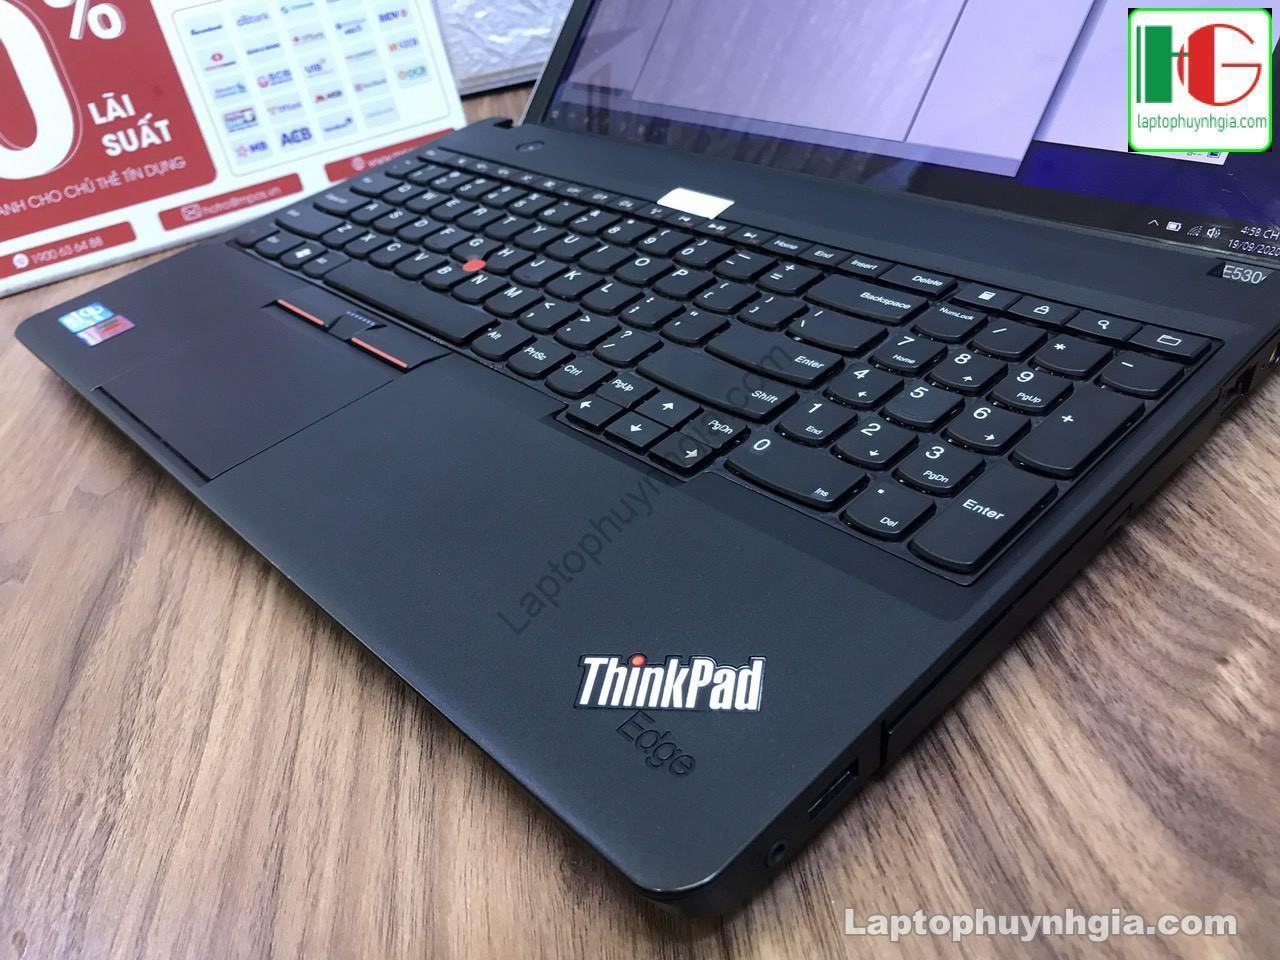 Thinkpad E530 I5 3230m 4g 500g Lcd 15 Laptopcubinhduong.vn 2